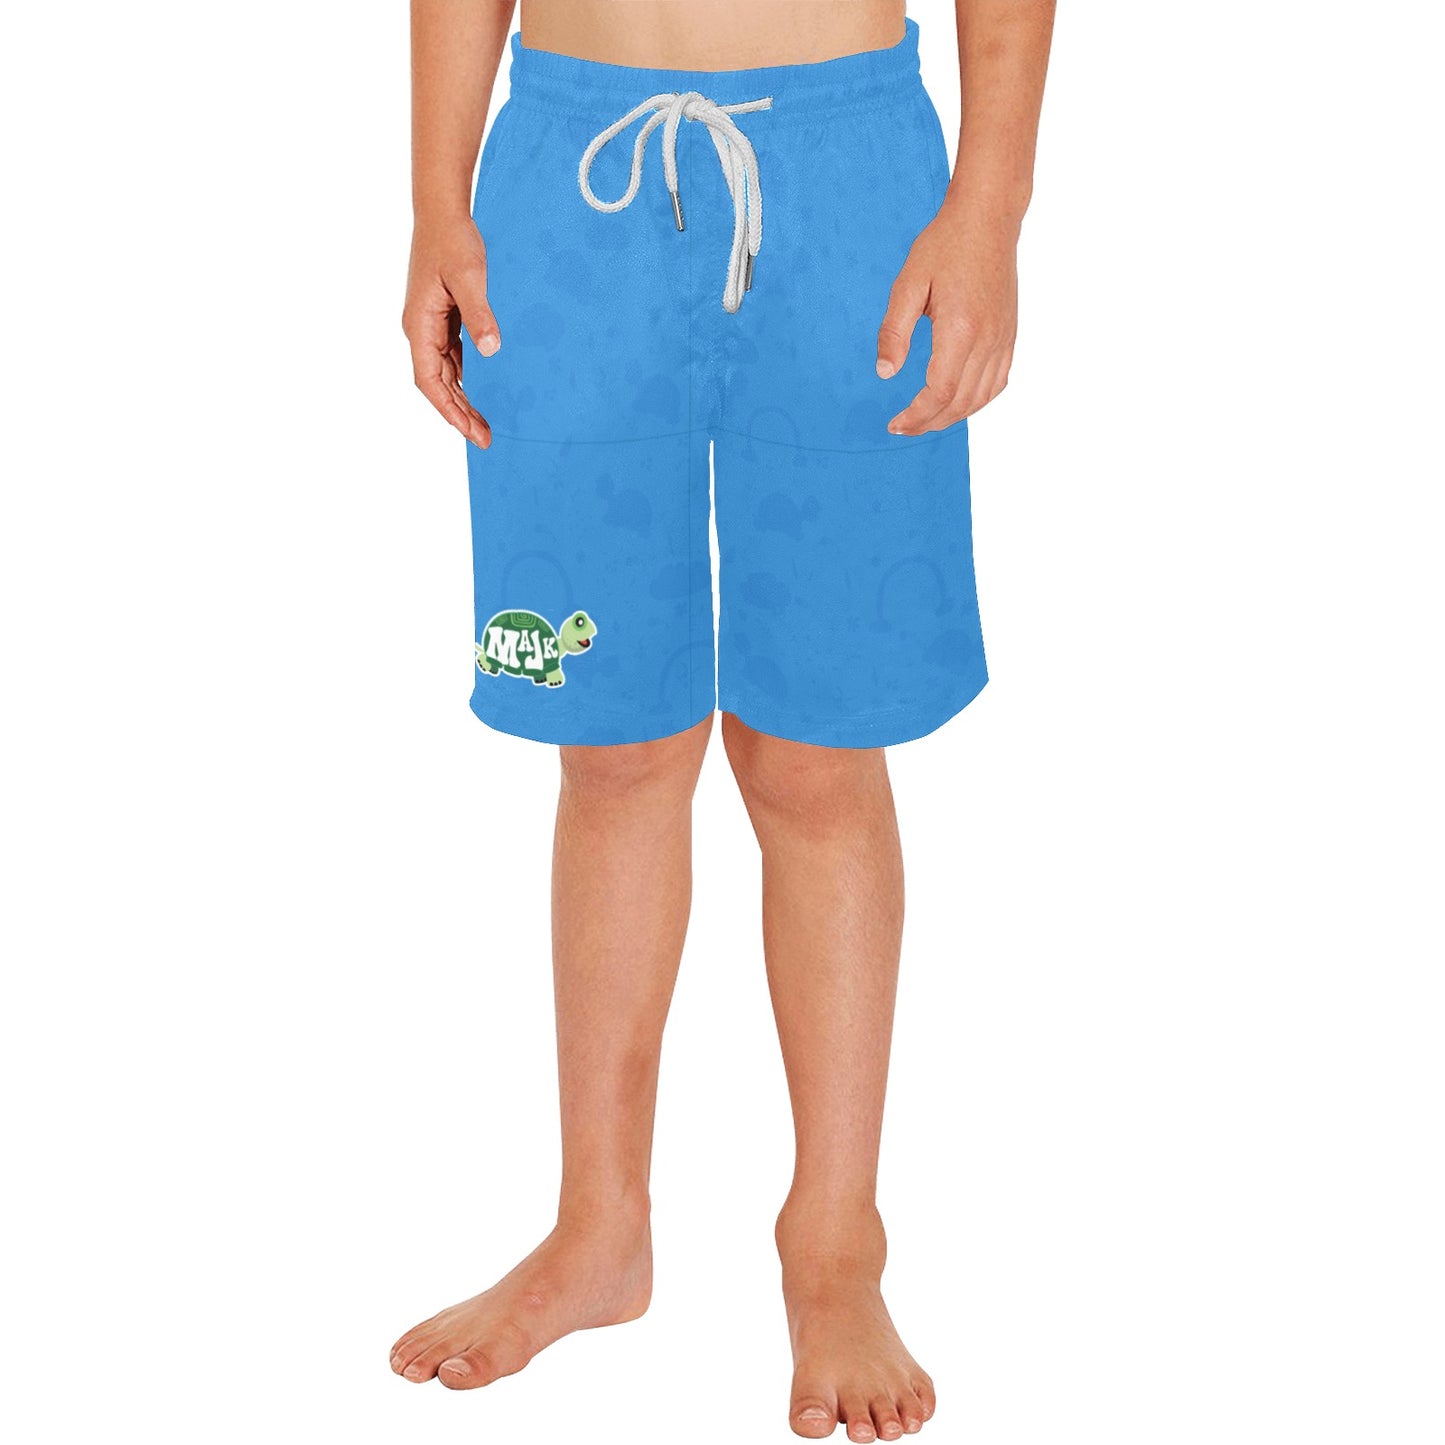 All Over Print Boy's Beach Shorts "My Happy Days"